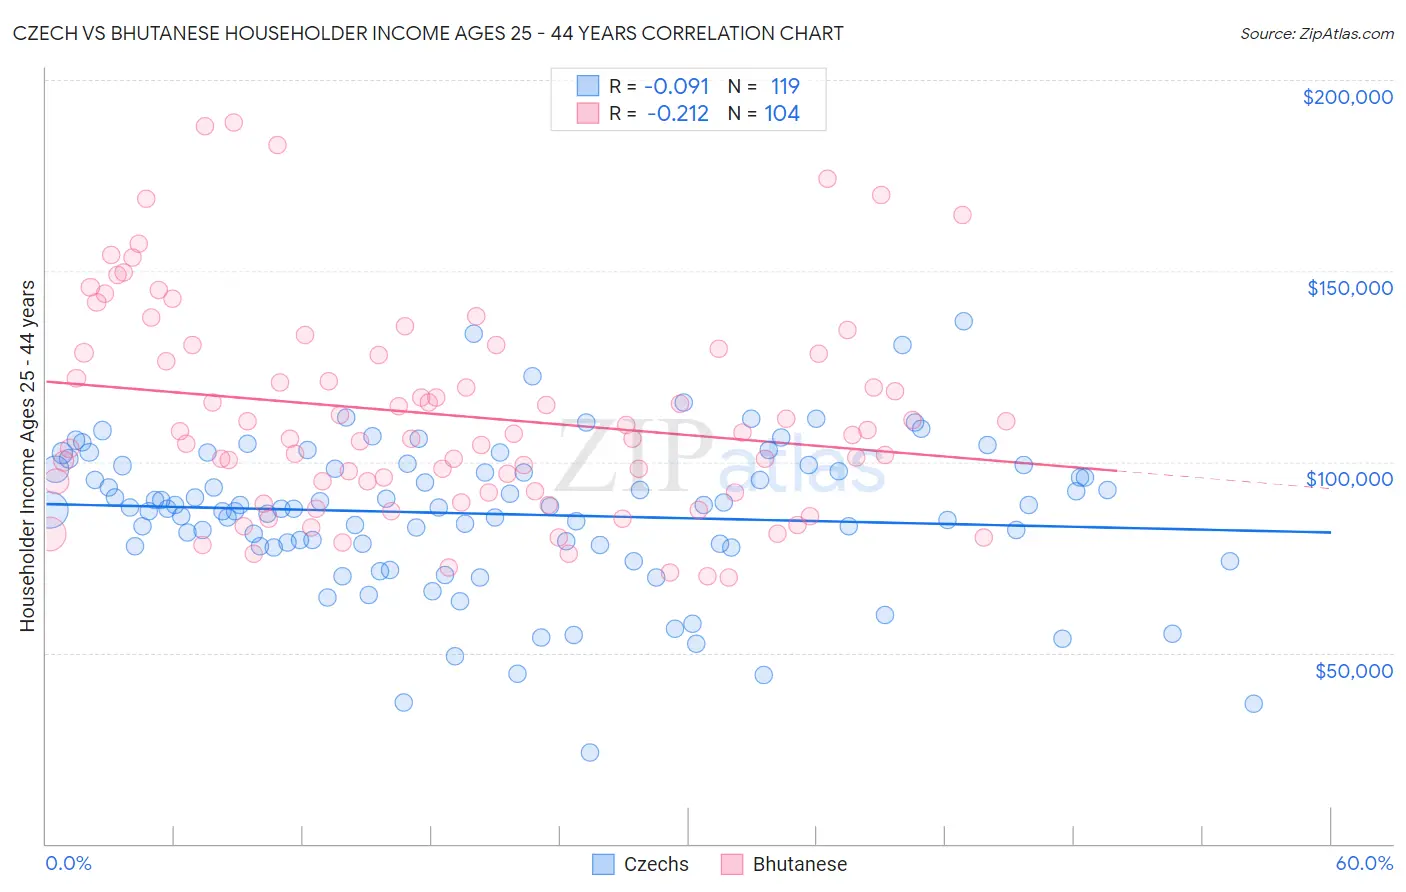 Czech vs Bhutanese Householder Income Ages 25 - 44 years